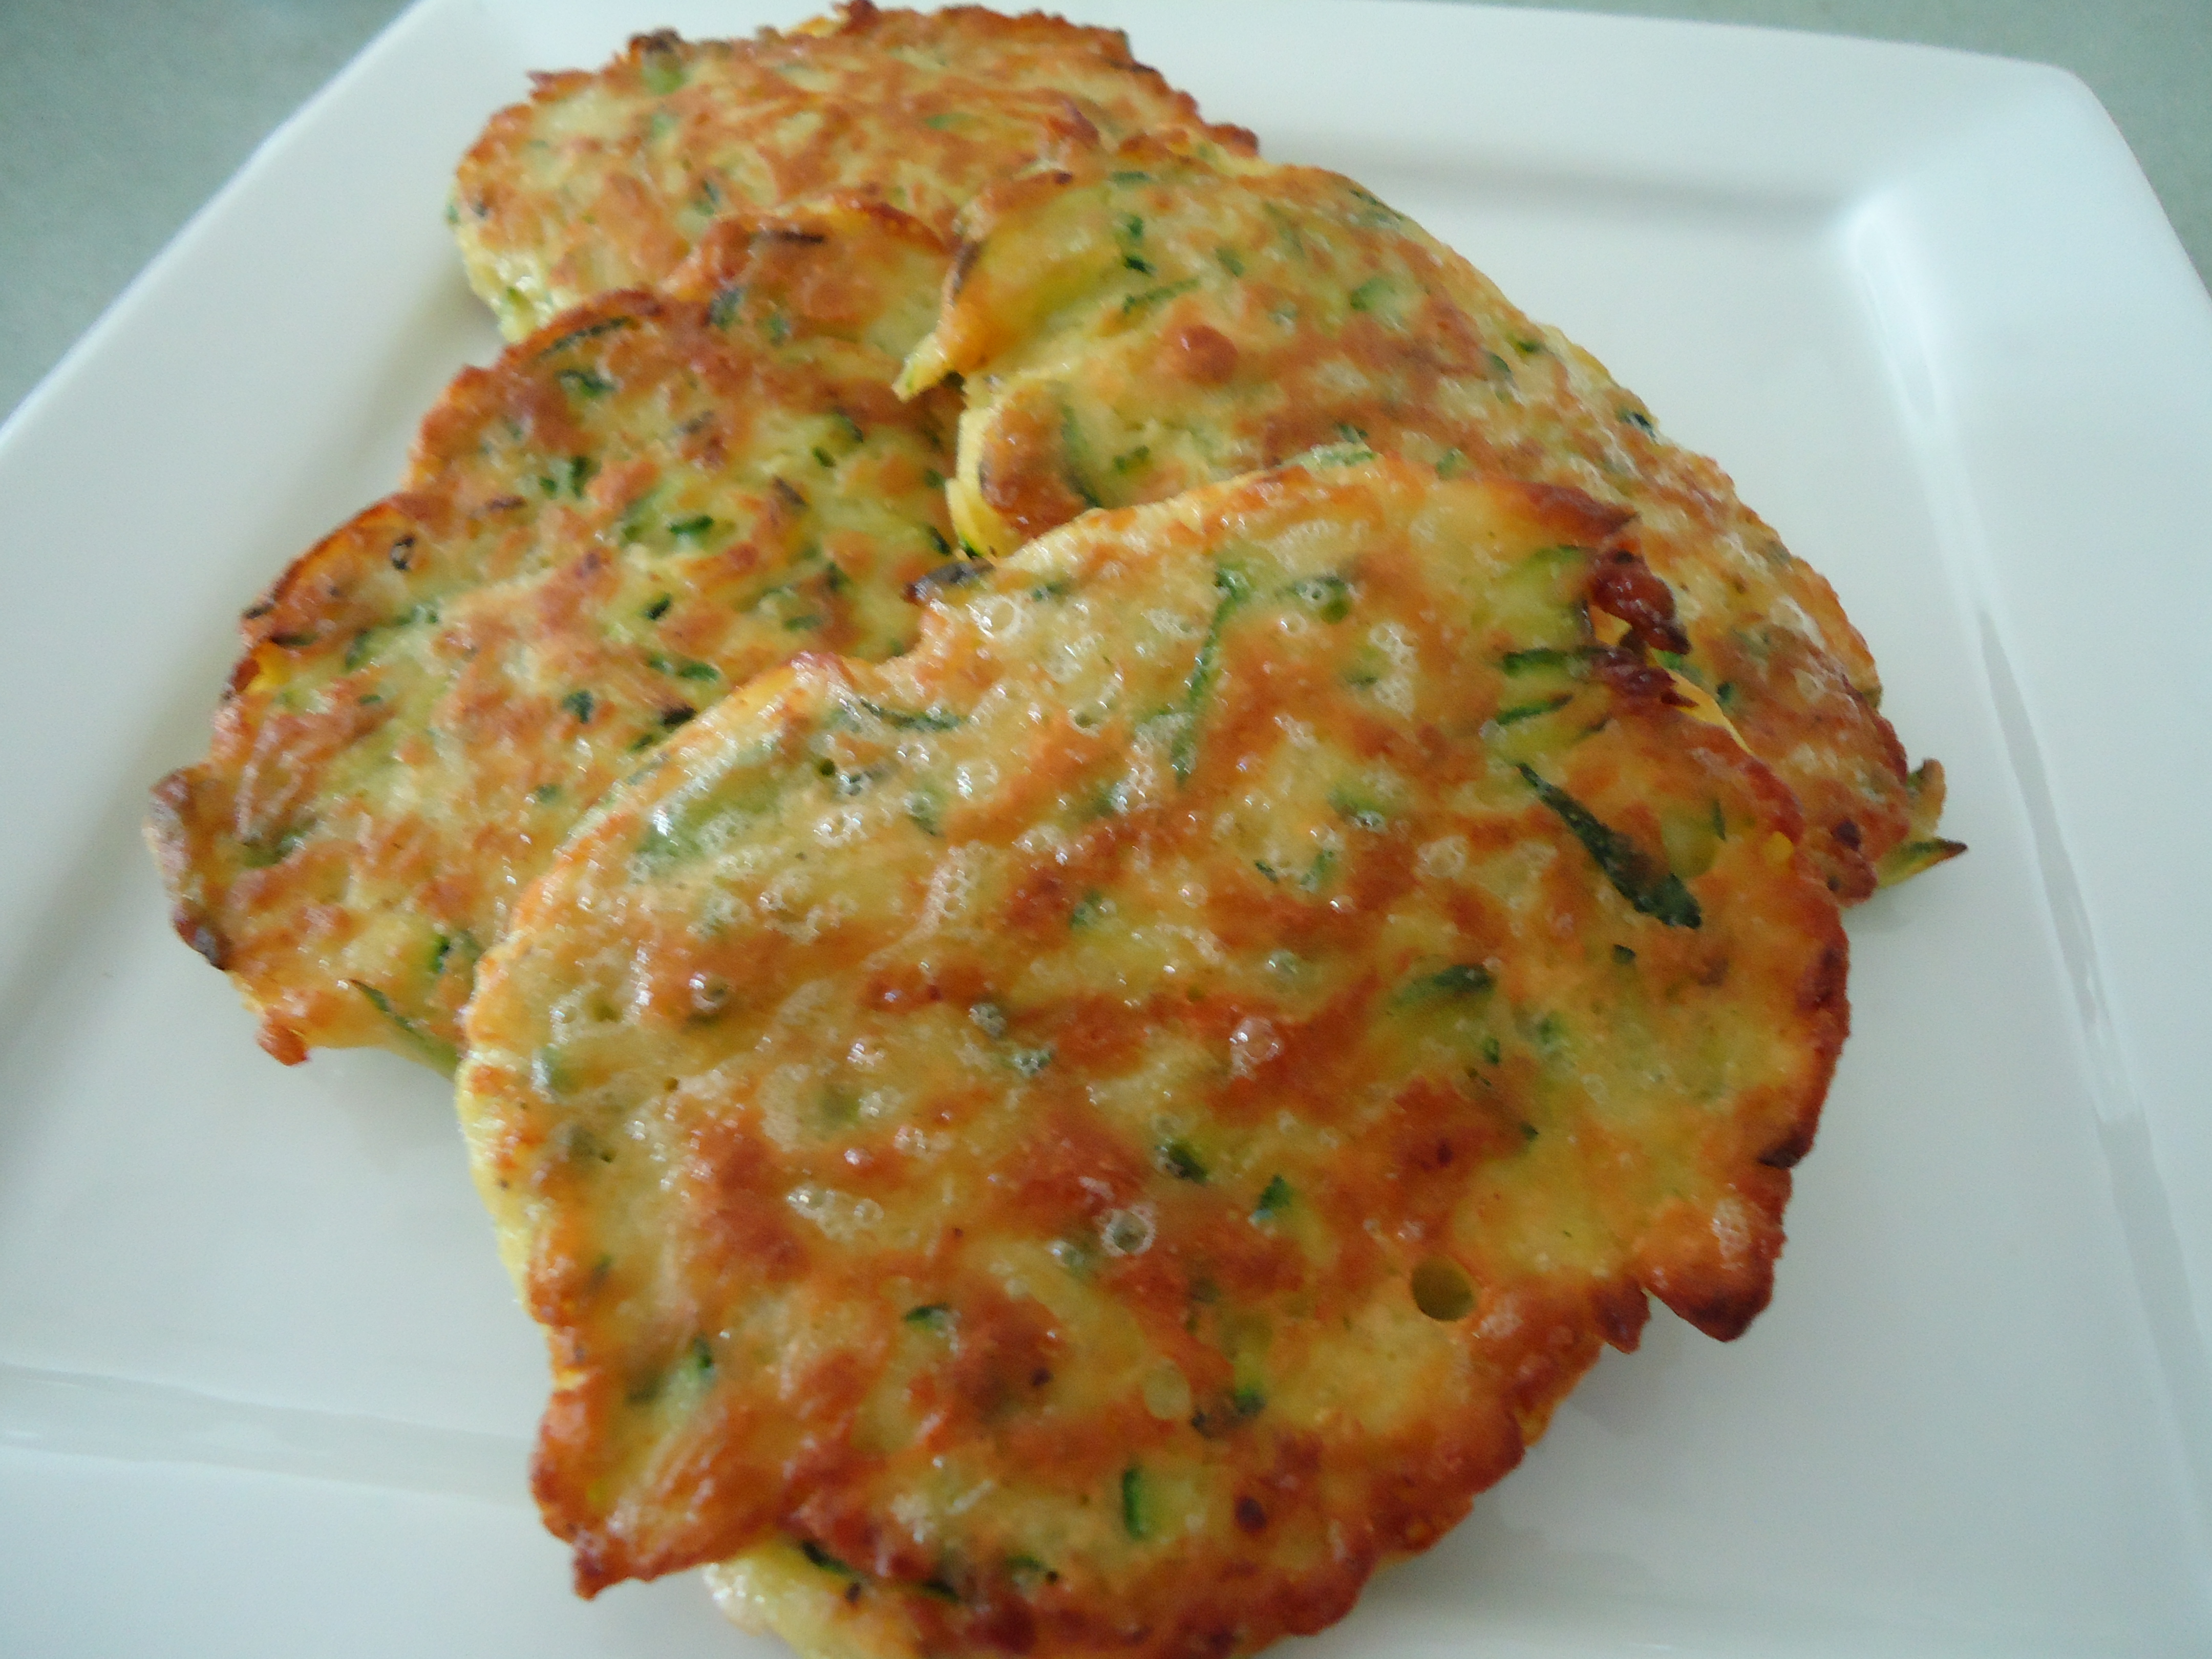 Barefoot Contessa's Zucchini Pan Cakes | Brilliant Barefoot Contessa Recipes To Try At Home | Homemade Recipes